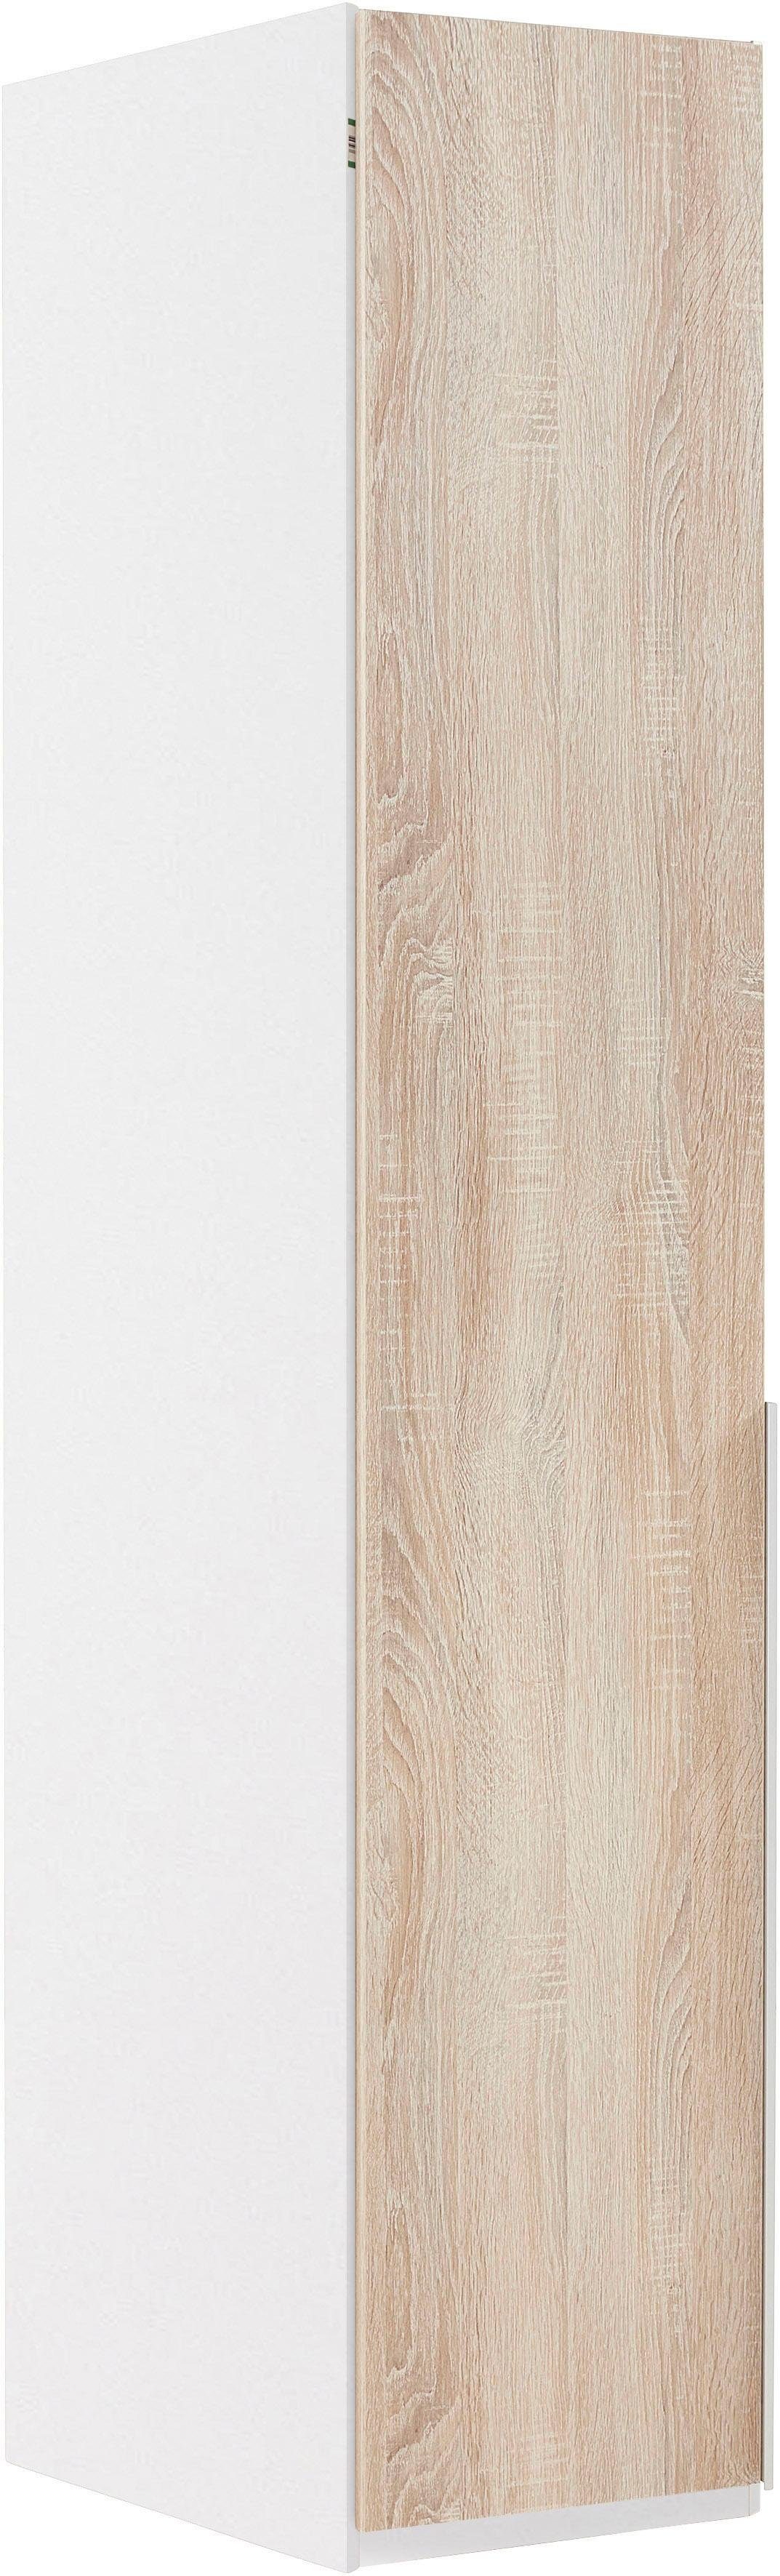 wimex hoekkledingkast new york naar keuze 208 of 236 cm hoog wit